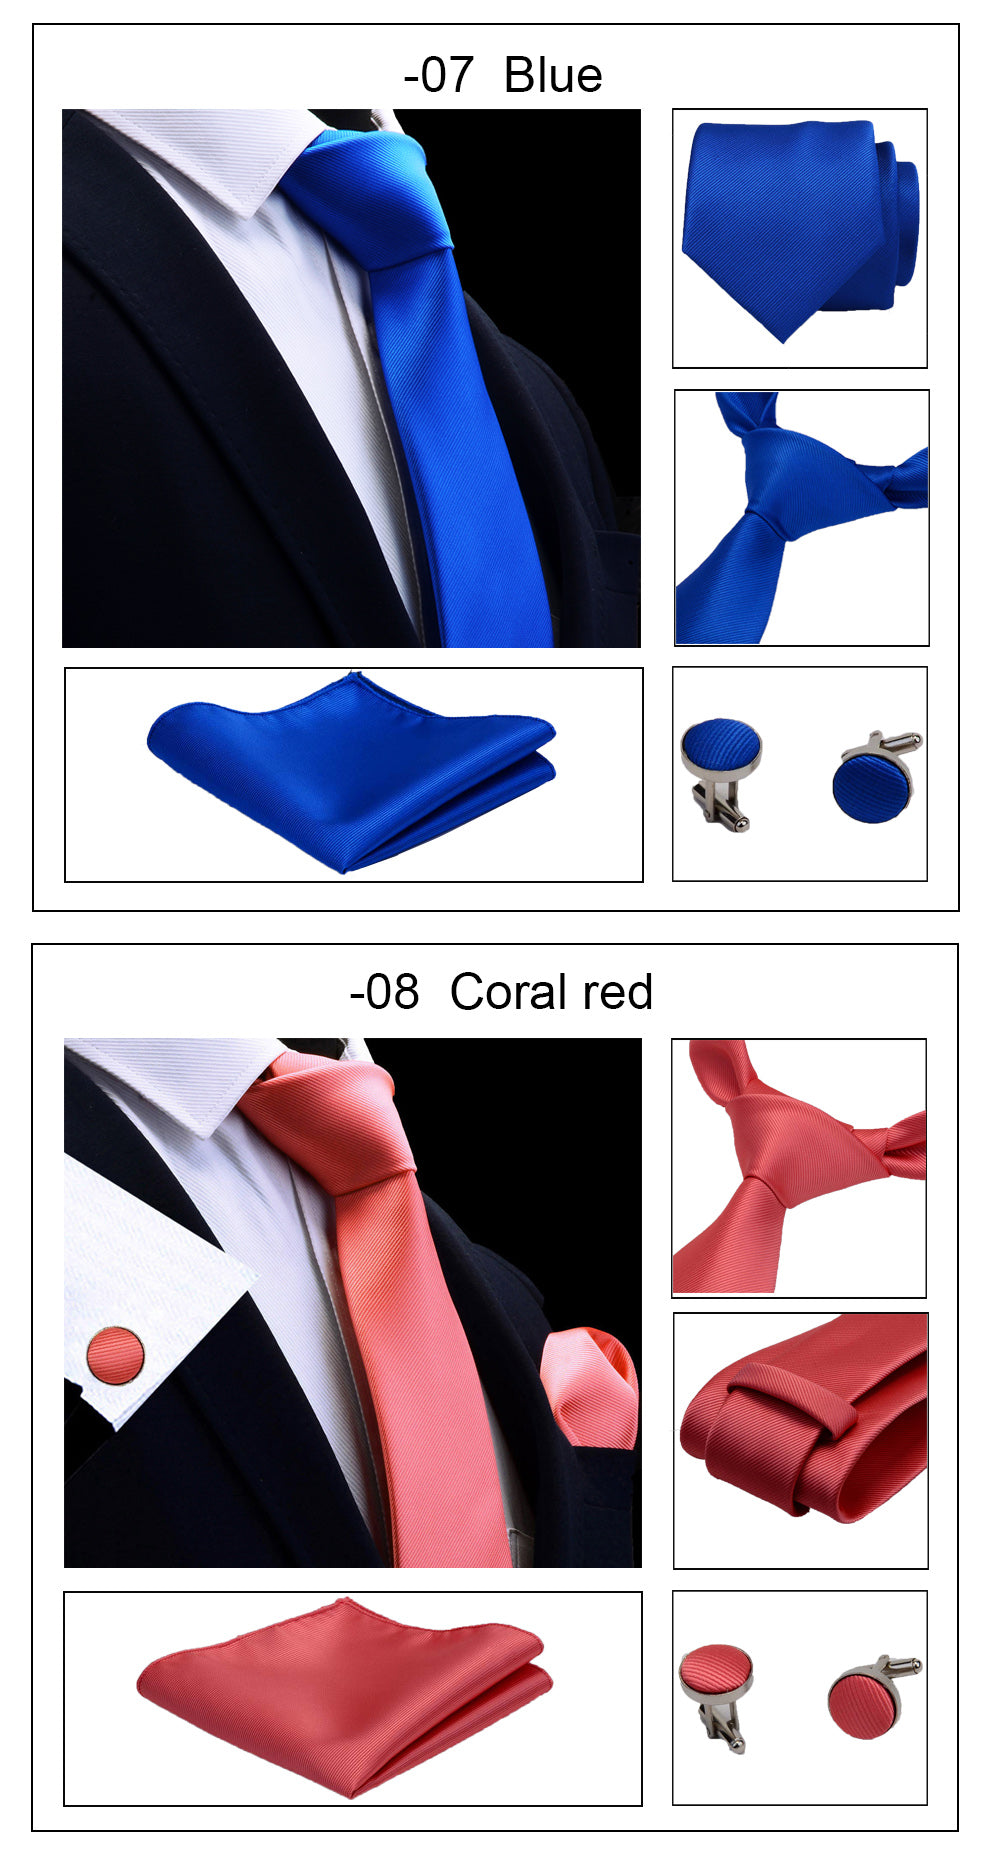 3 Piece Men's Silk Tie Set 8cm Ties Handkerchief Cufflinks Sets Red Gold Purple Necktie for Men Wedding Gift The Clothing Company Sydney